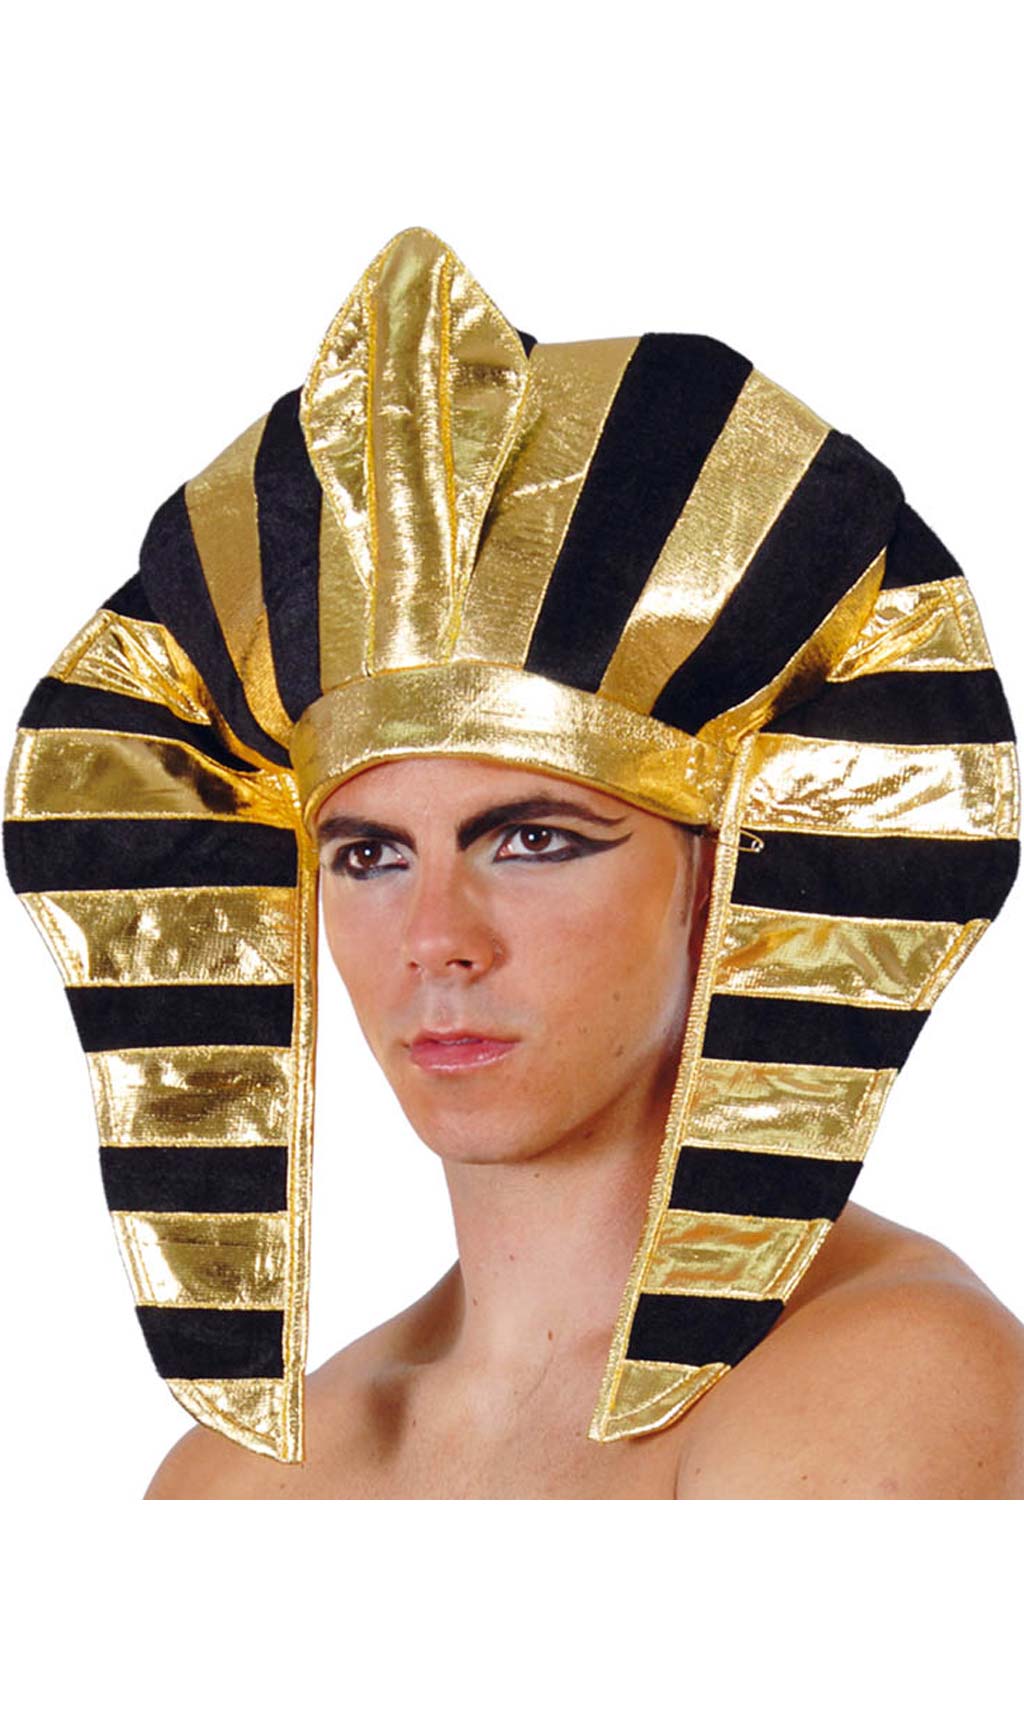 Ägyptischer Faraonen-Kopfschmuck